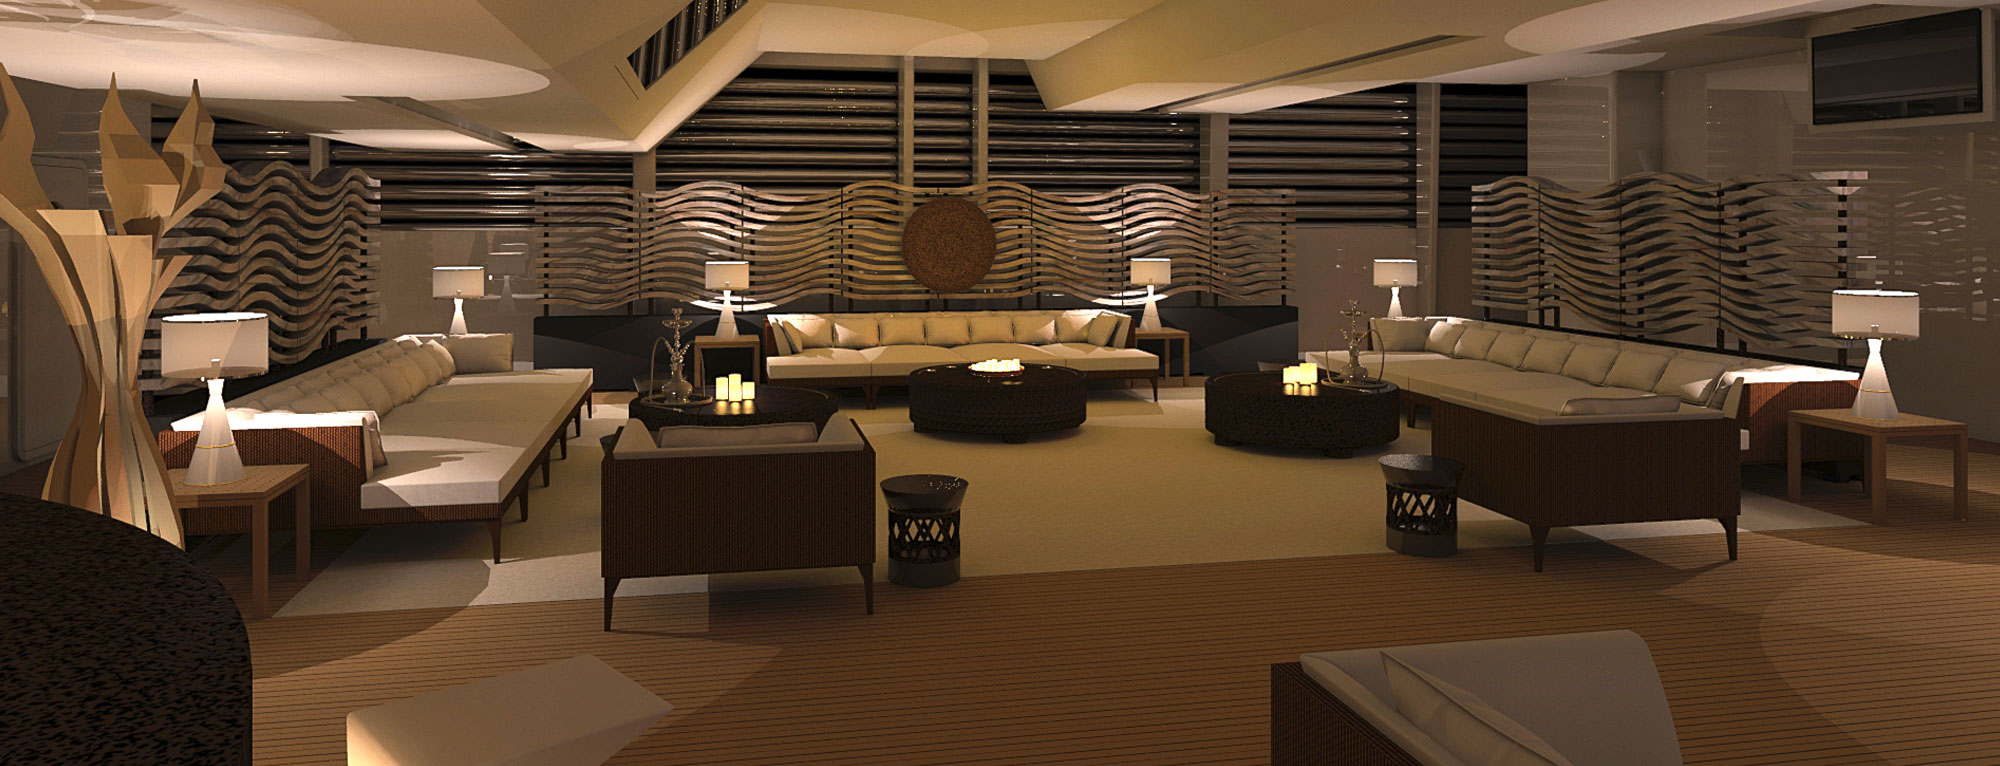 Chillout Lounge 140m Matthew Trustam Design